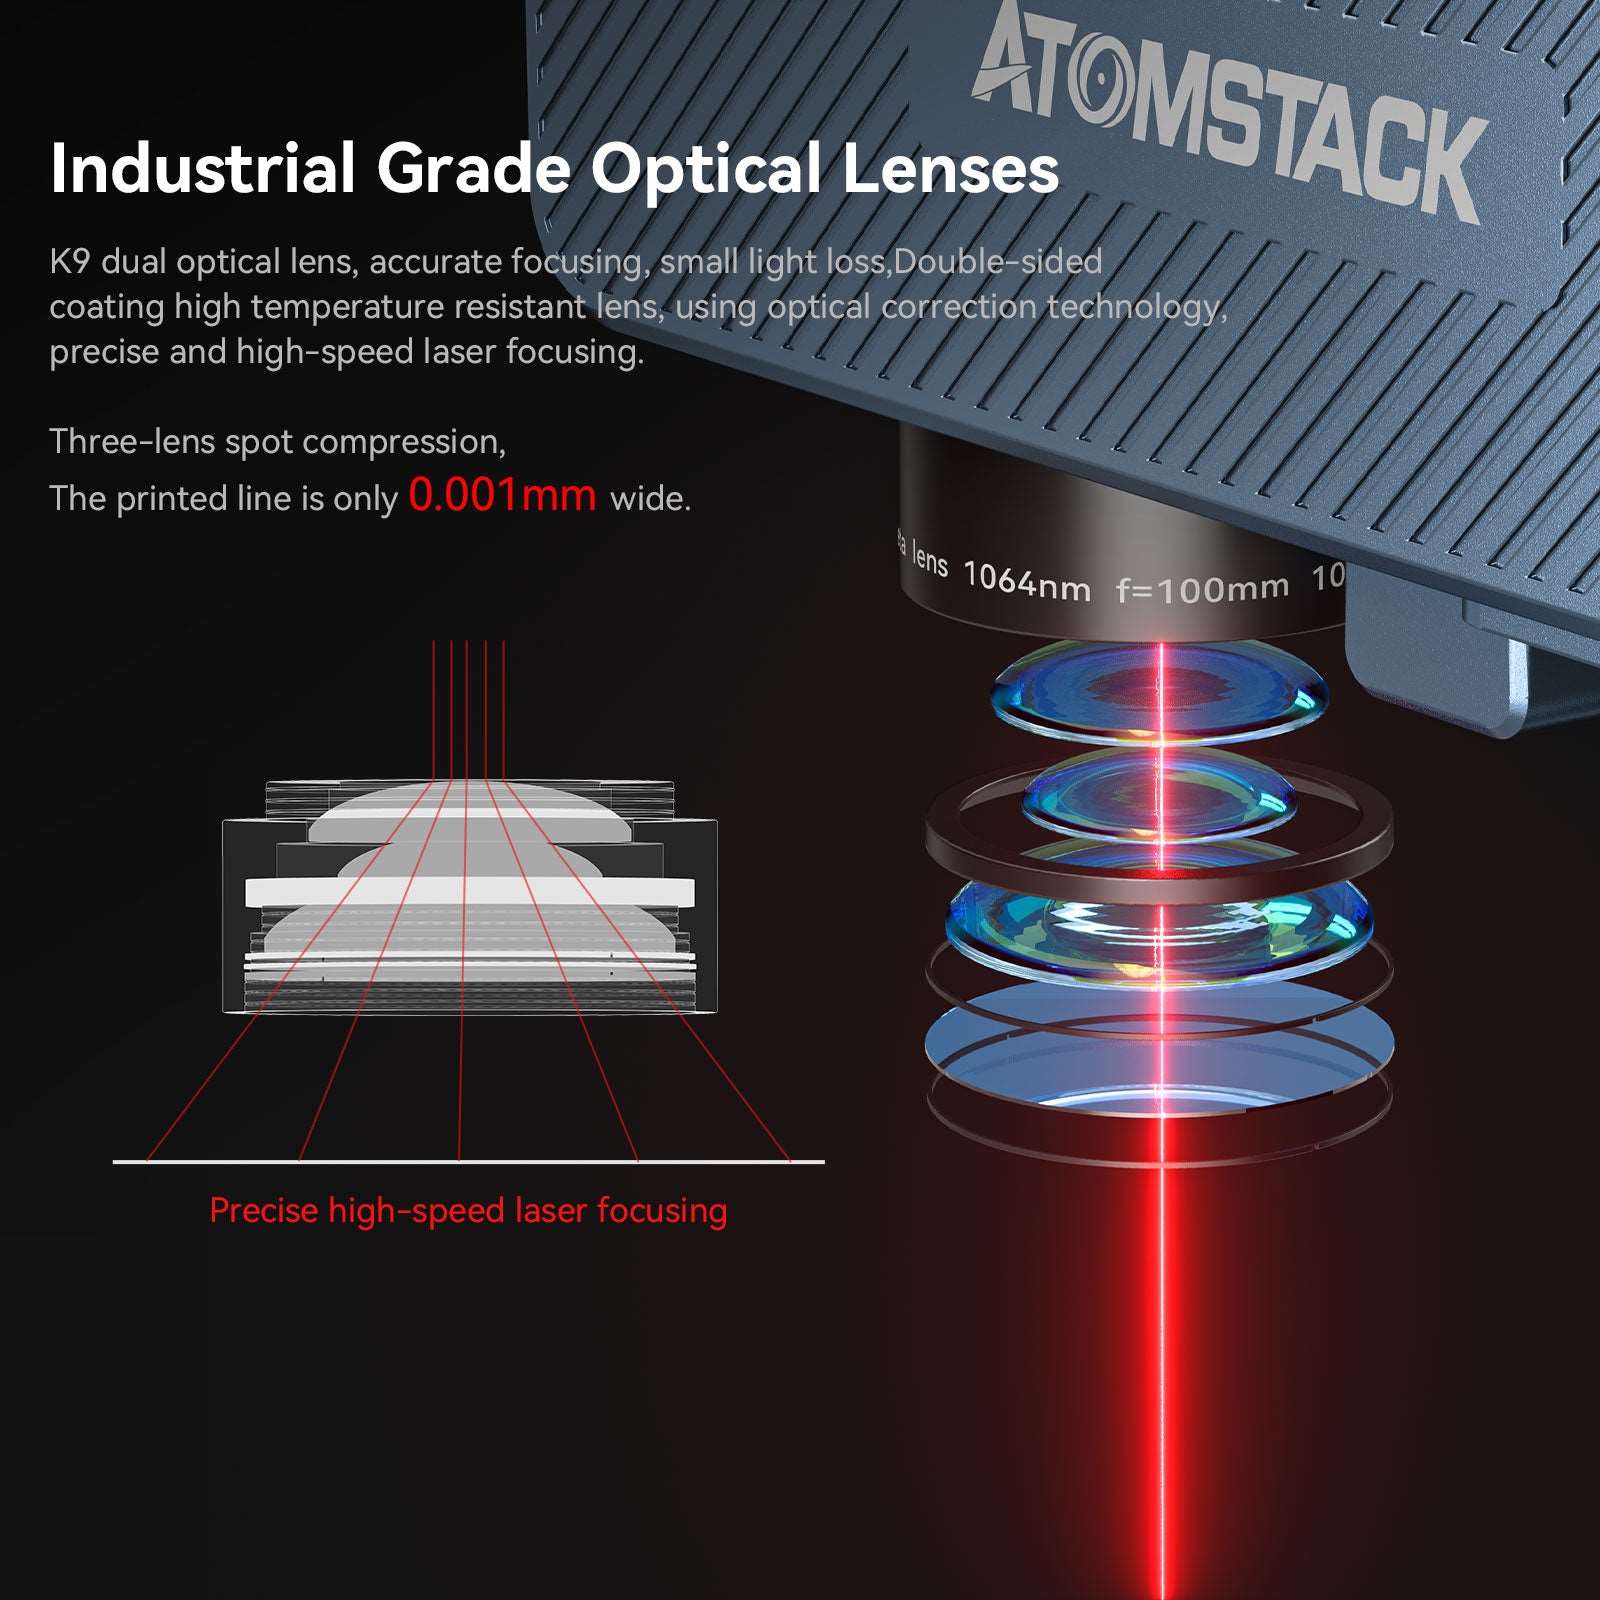 New arrival Atomstack M4 20W Fiber laser marking machine - Atomstack Factory Store